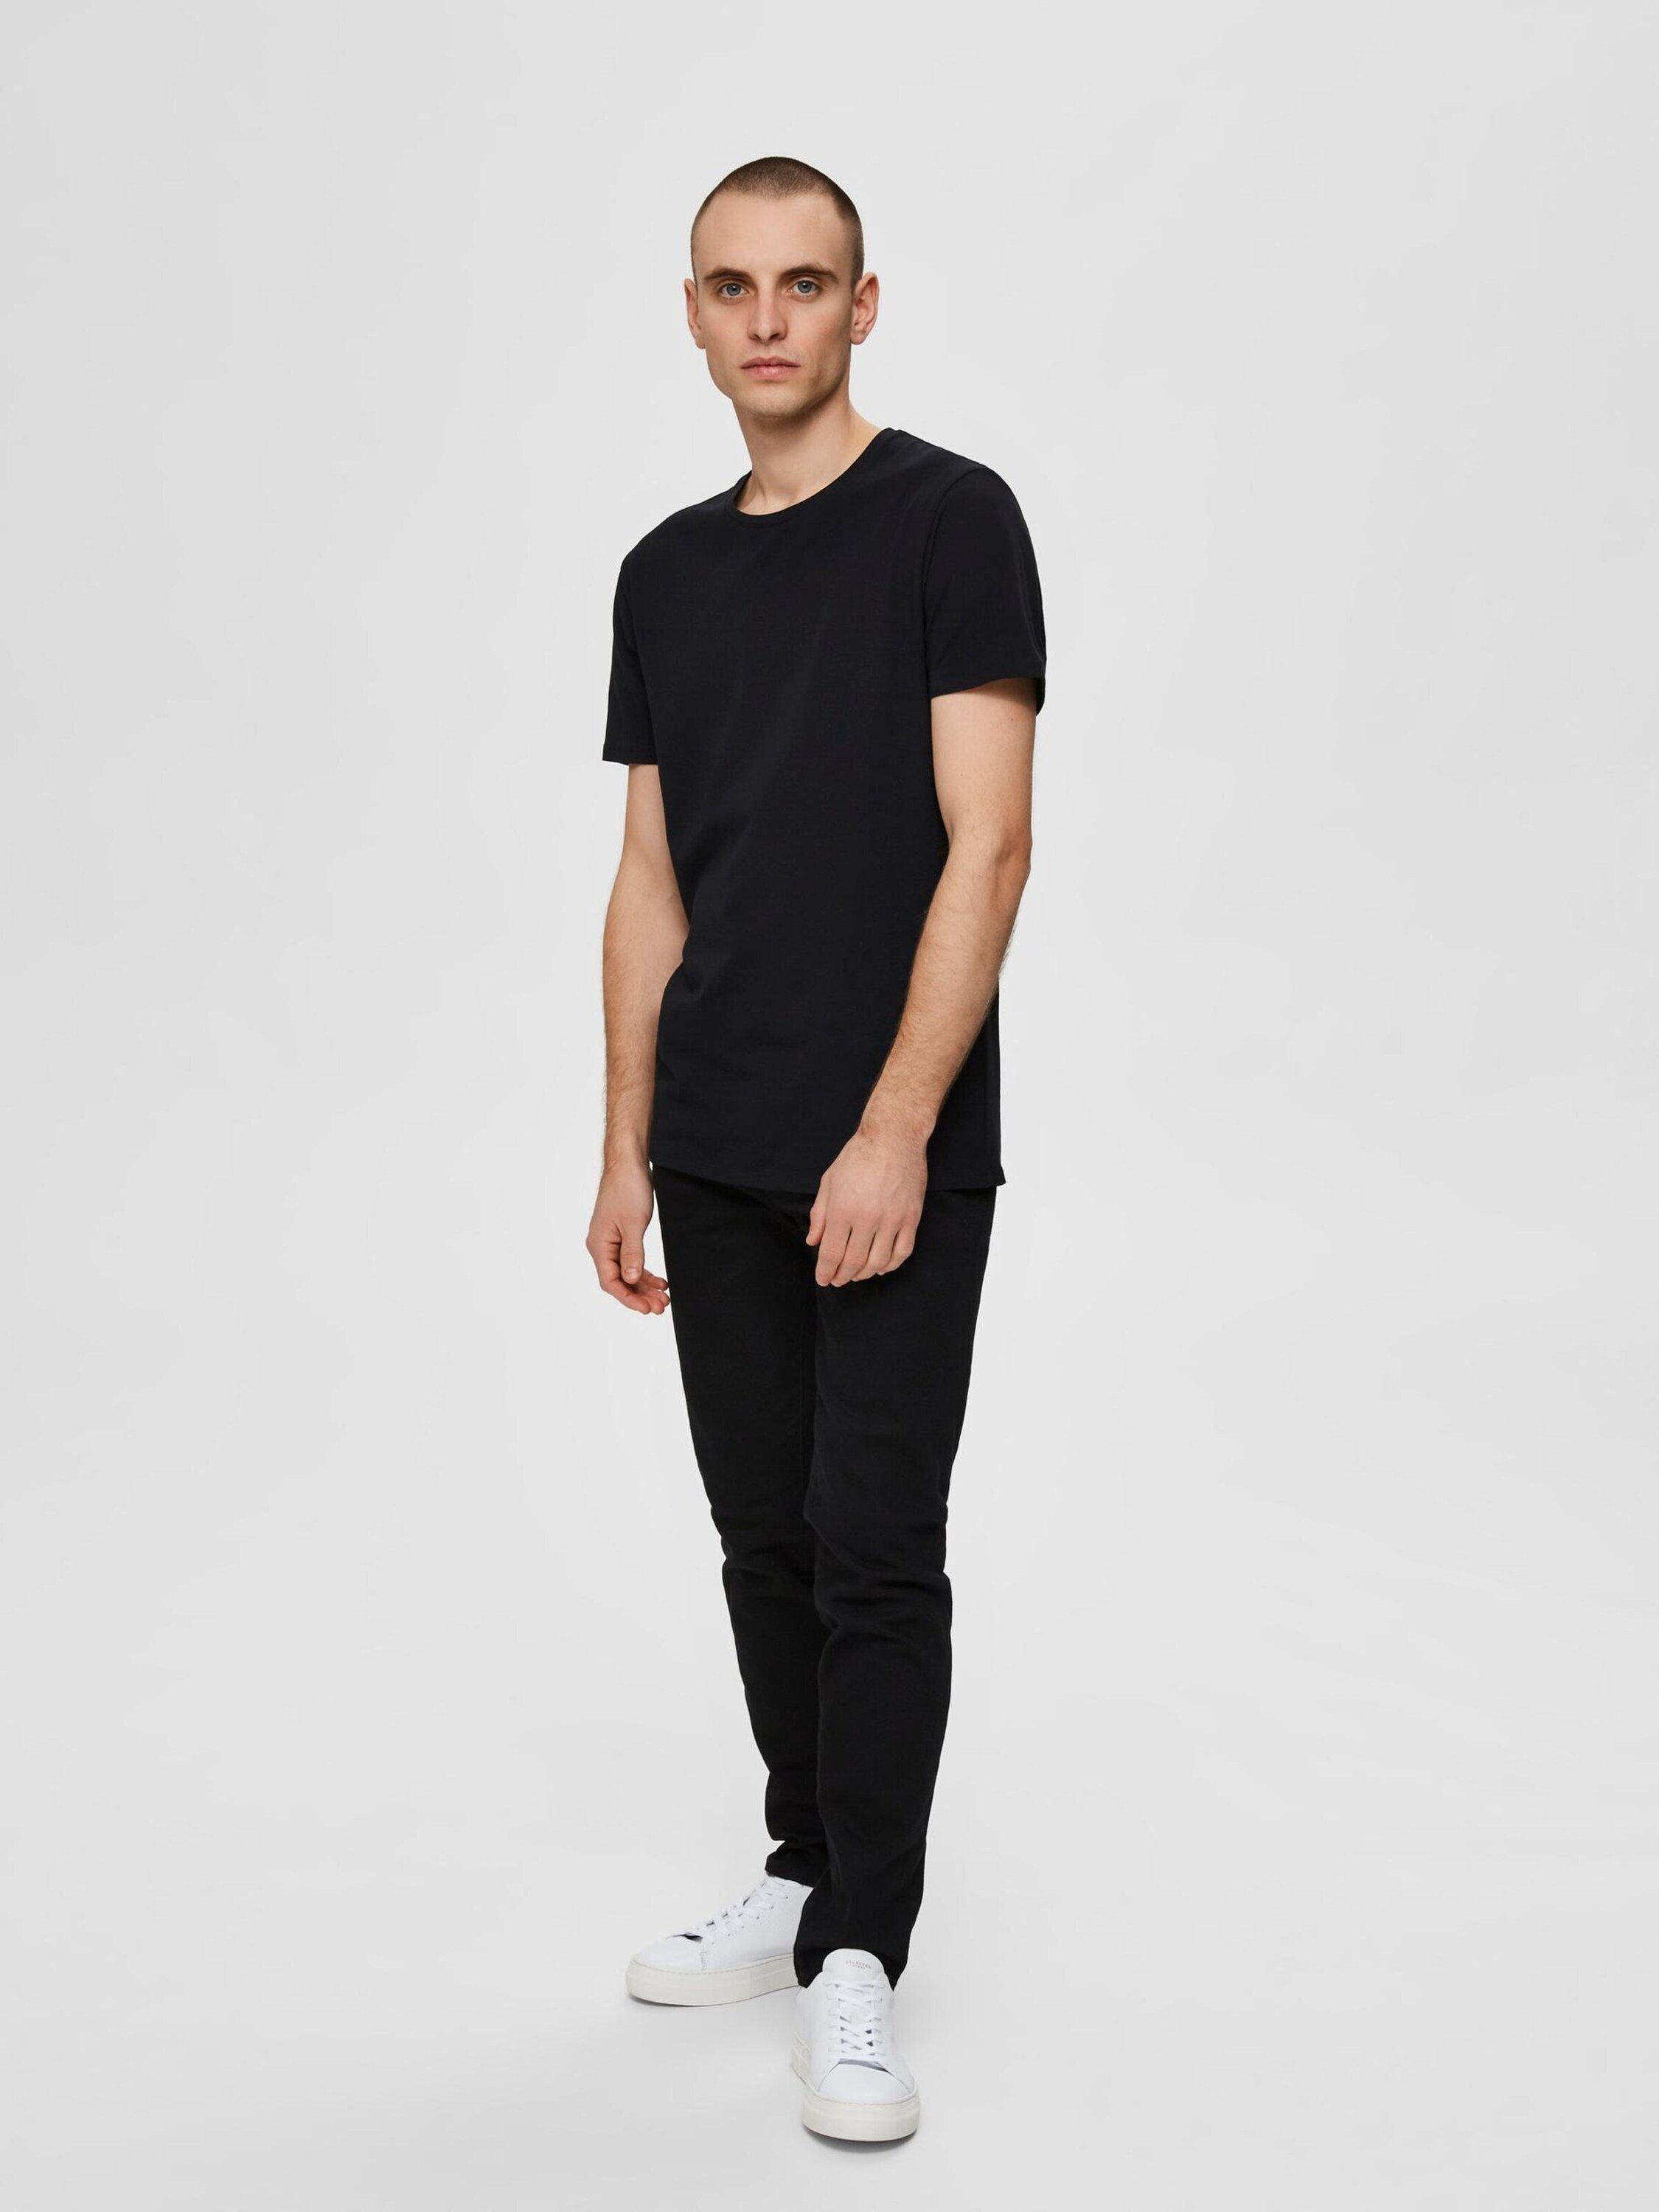 SELECTED HOMME T-Shirt Black 16076191 (3-tlg) Bright + Blazer Navy White